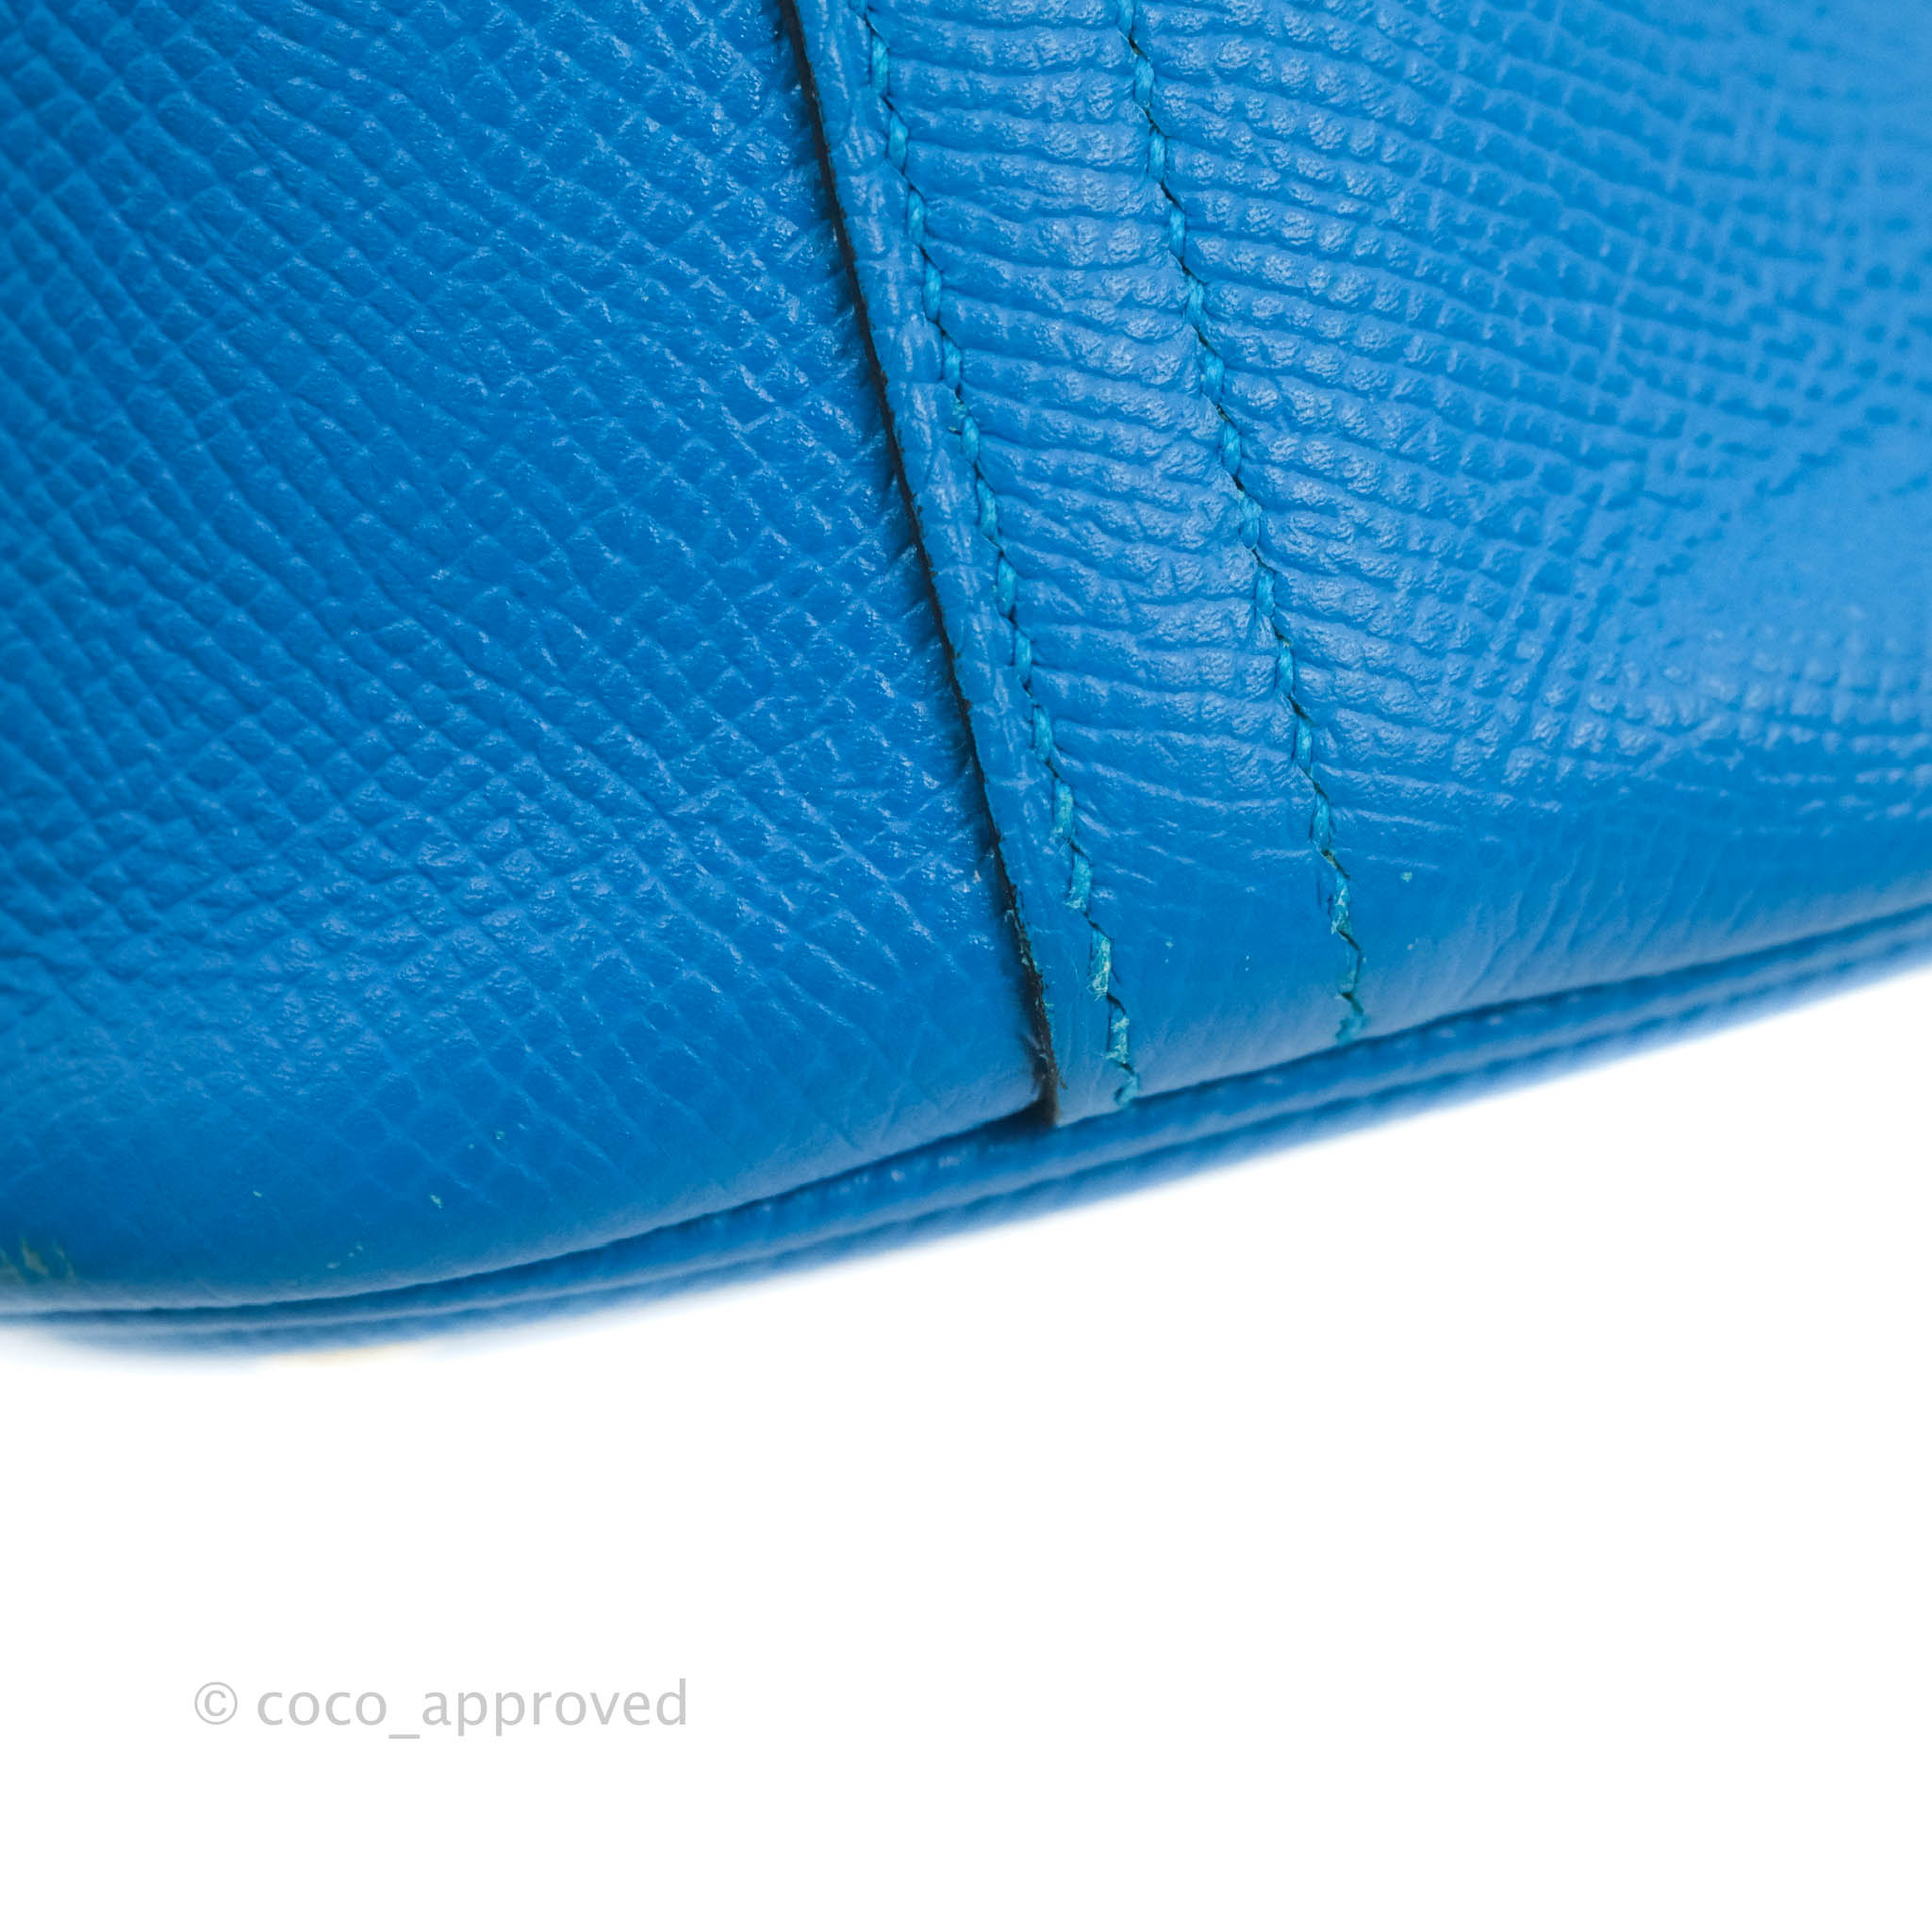 Hermès Swift Bolide 27 - Blue Handle Bags, Handbags - HER556387